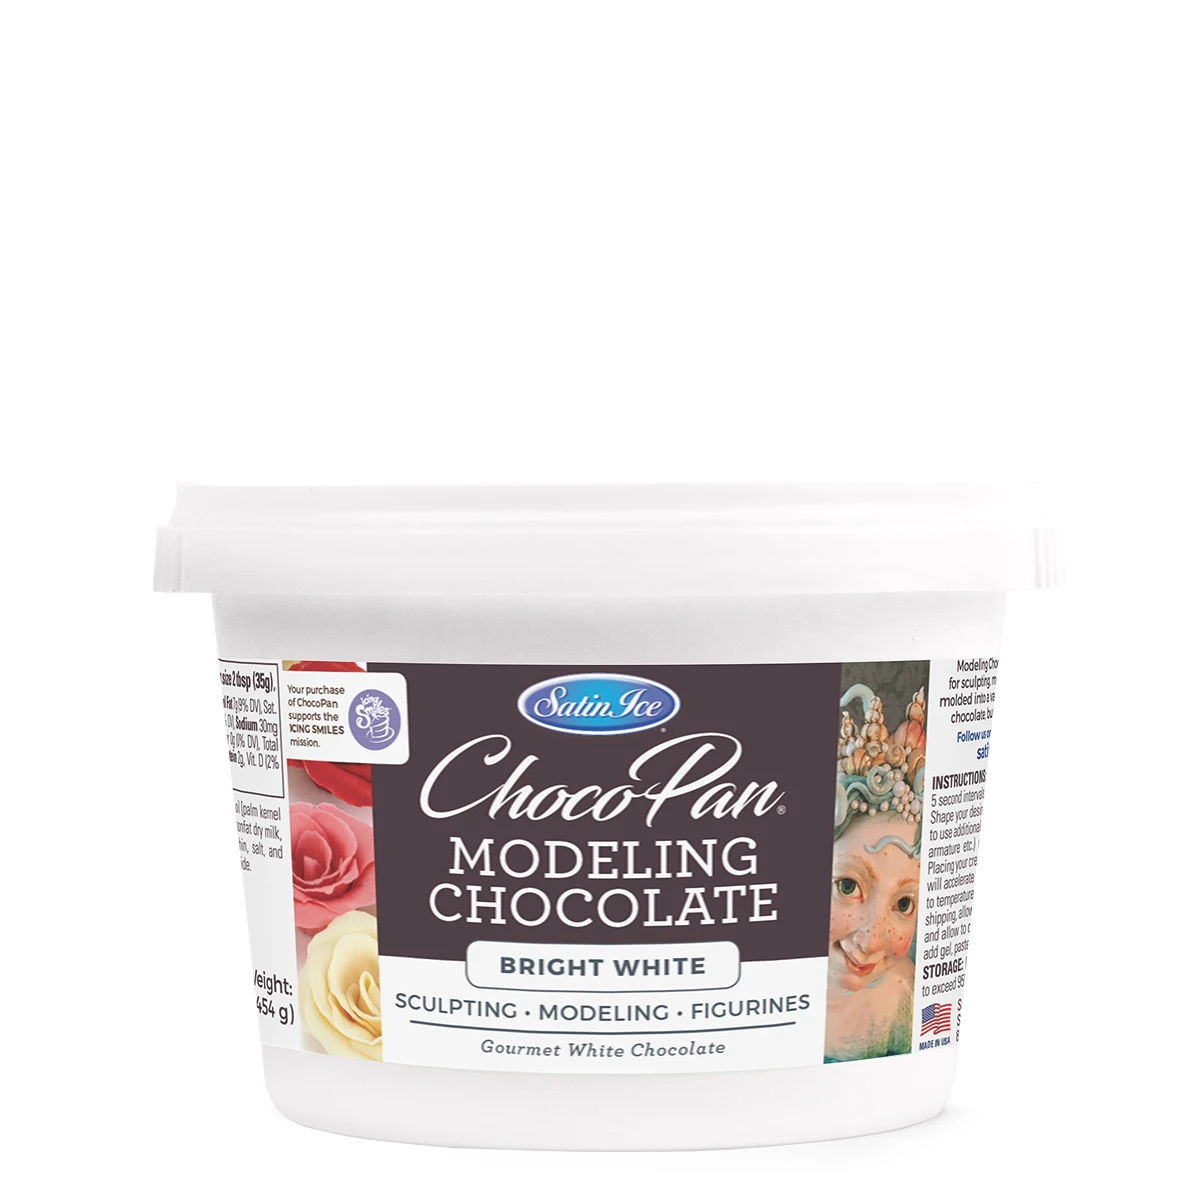 Satin Ice - Choco Pan Modeling Chocolate